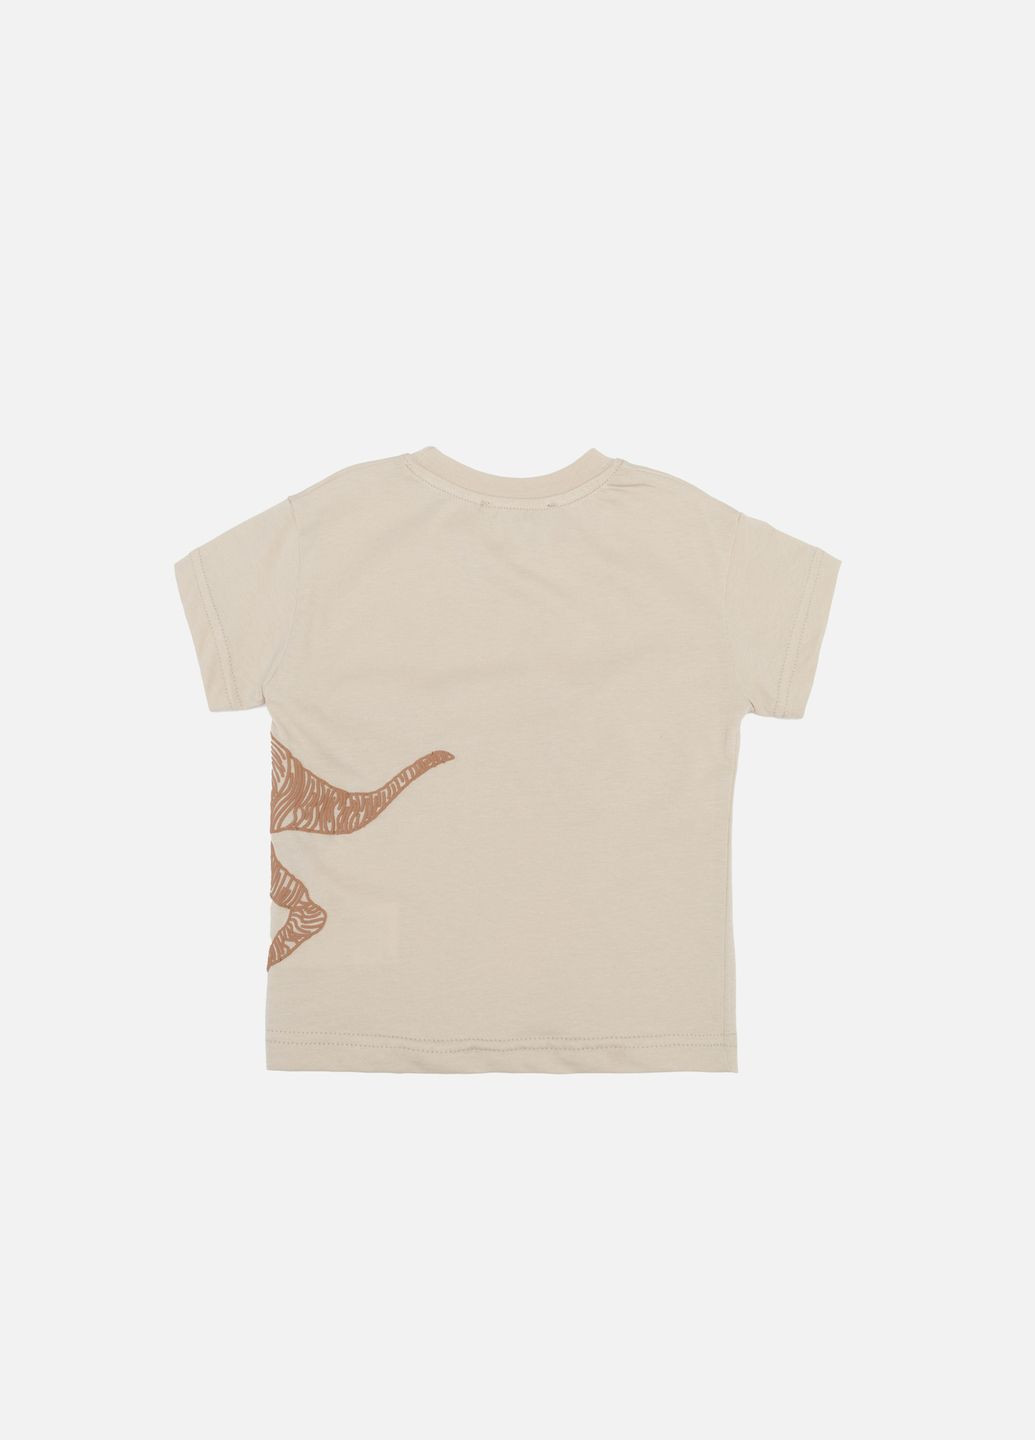 Бежевая летняя футболка с коротким рукавом для мальчика цвет бежевый цб-00246446 First Kids